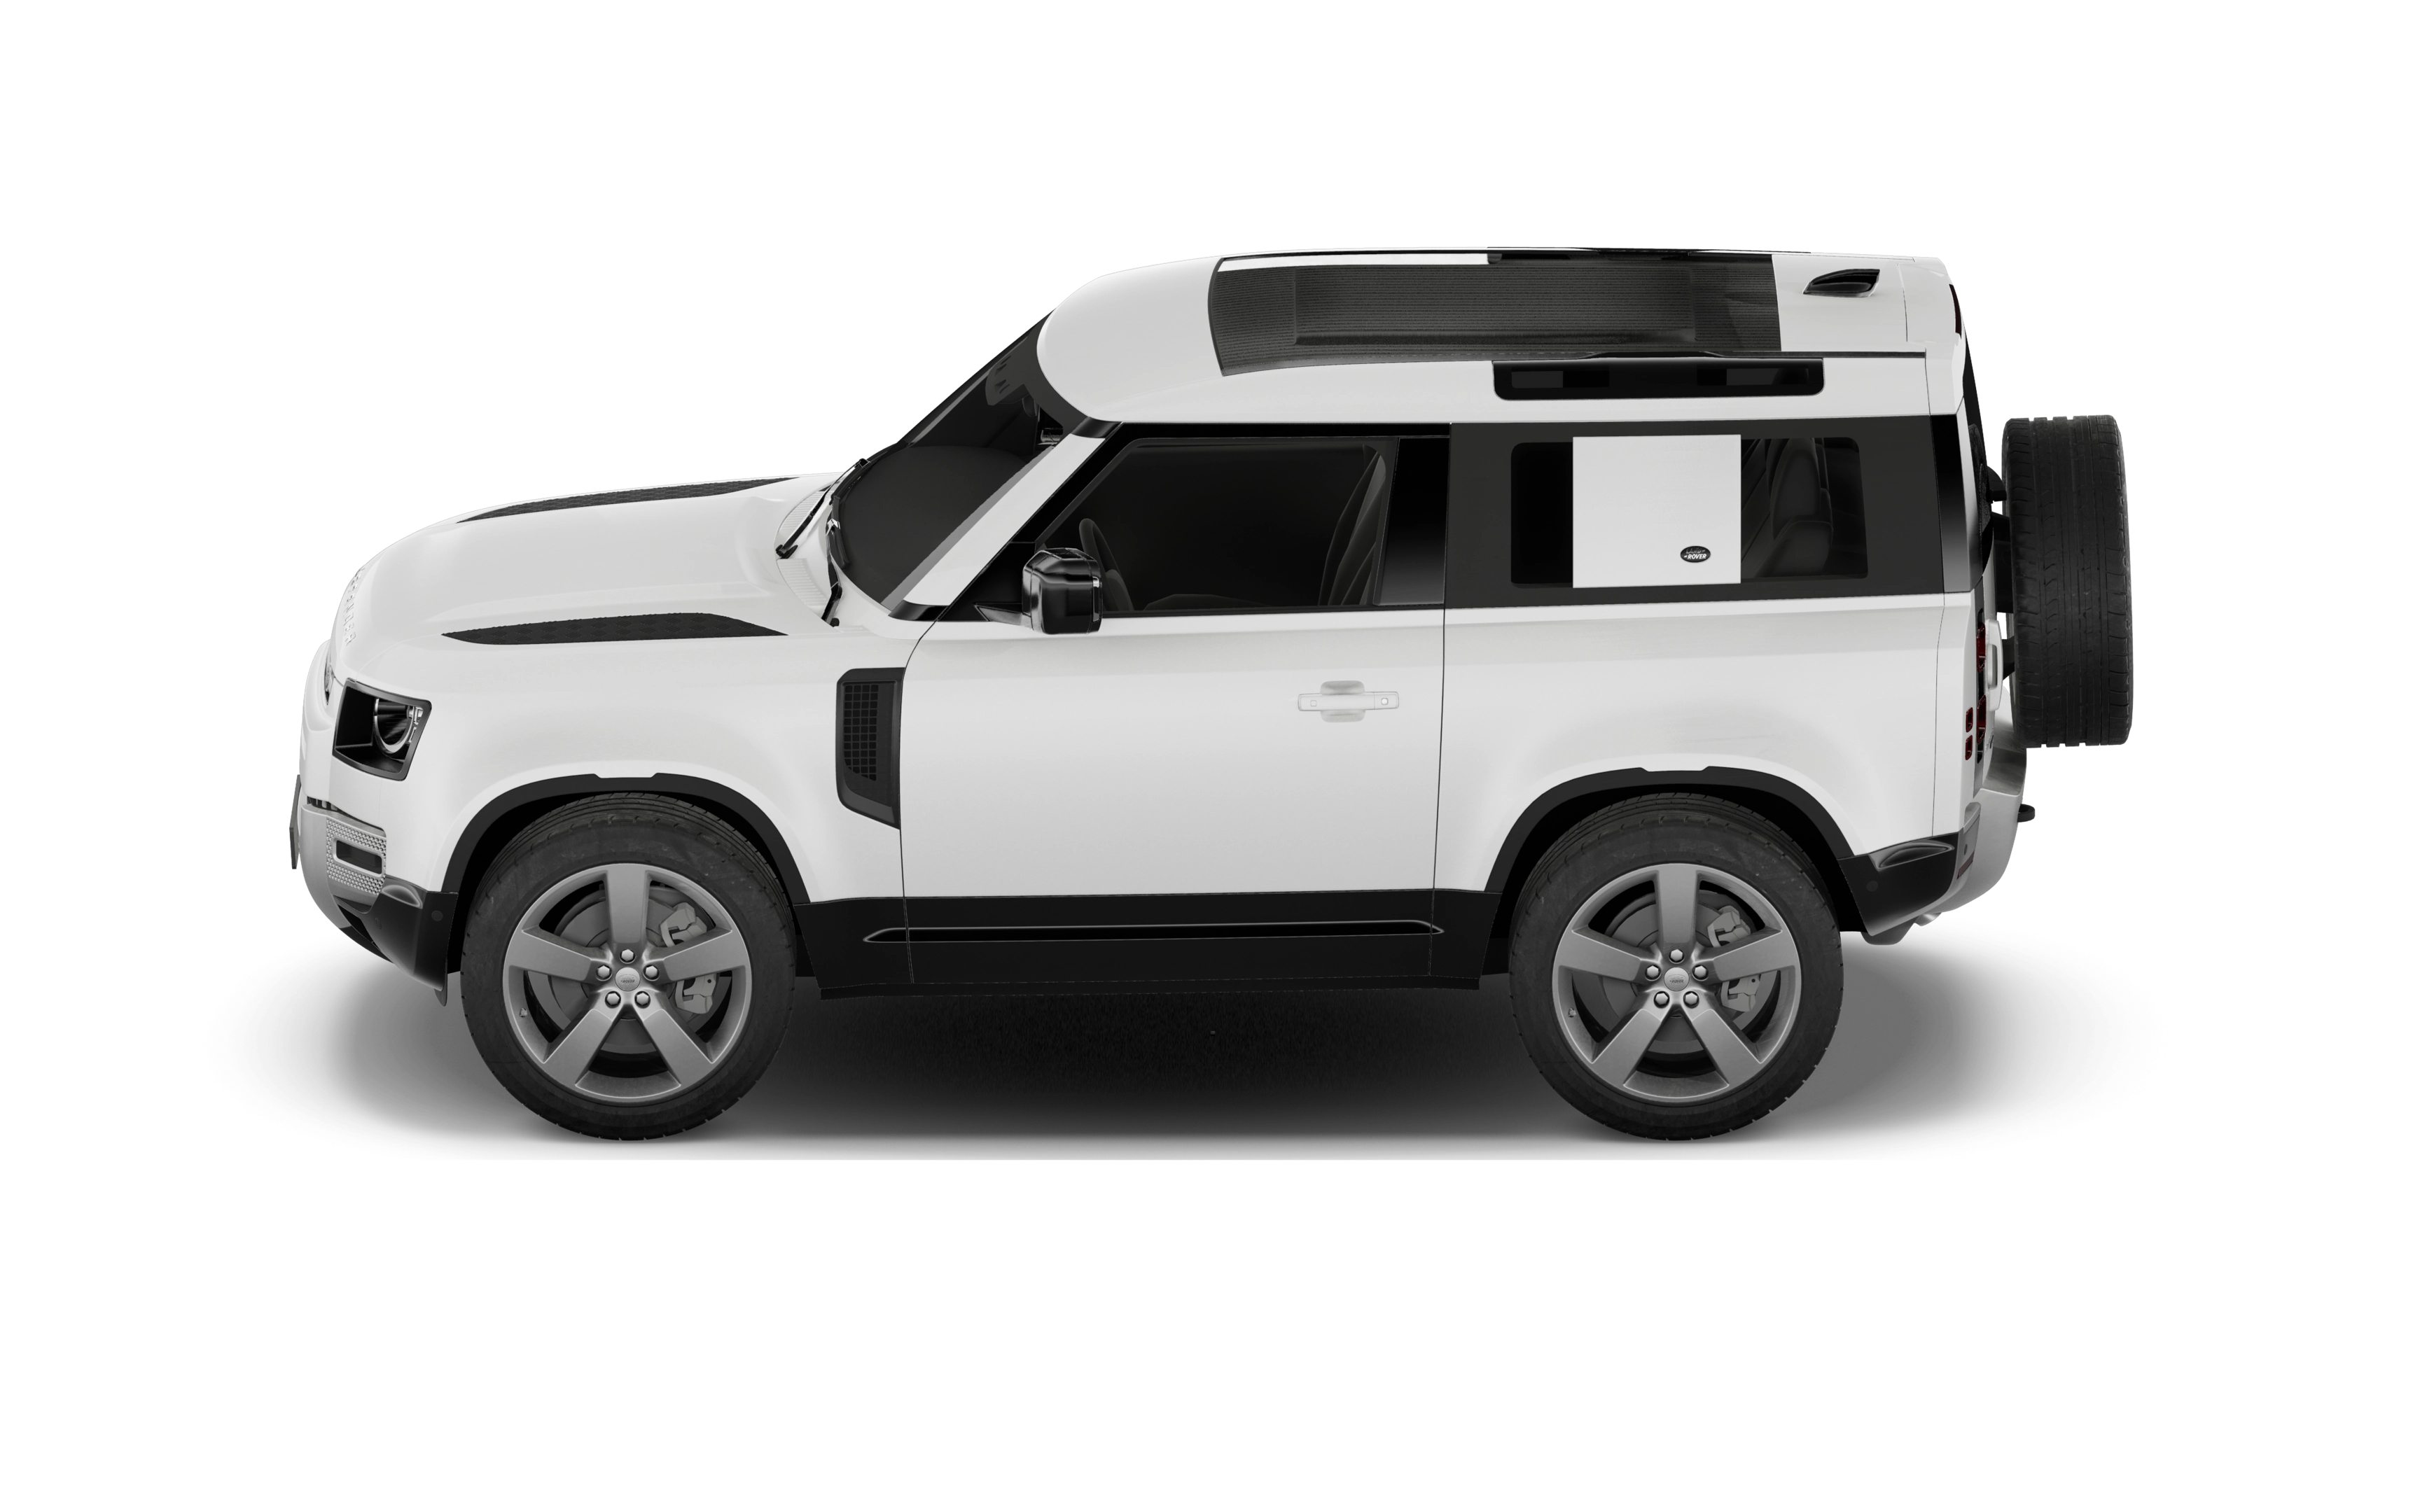 Land rover defender estate 3.0 d250 x-dynamic s 110 5 doors auto [7 seat]